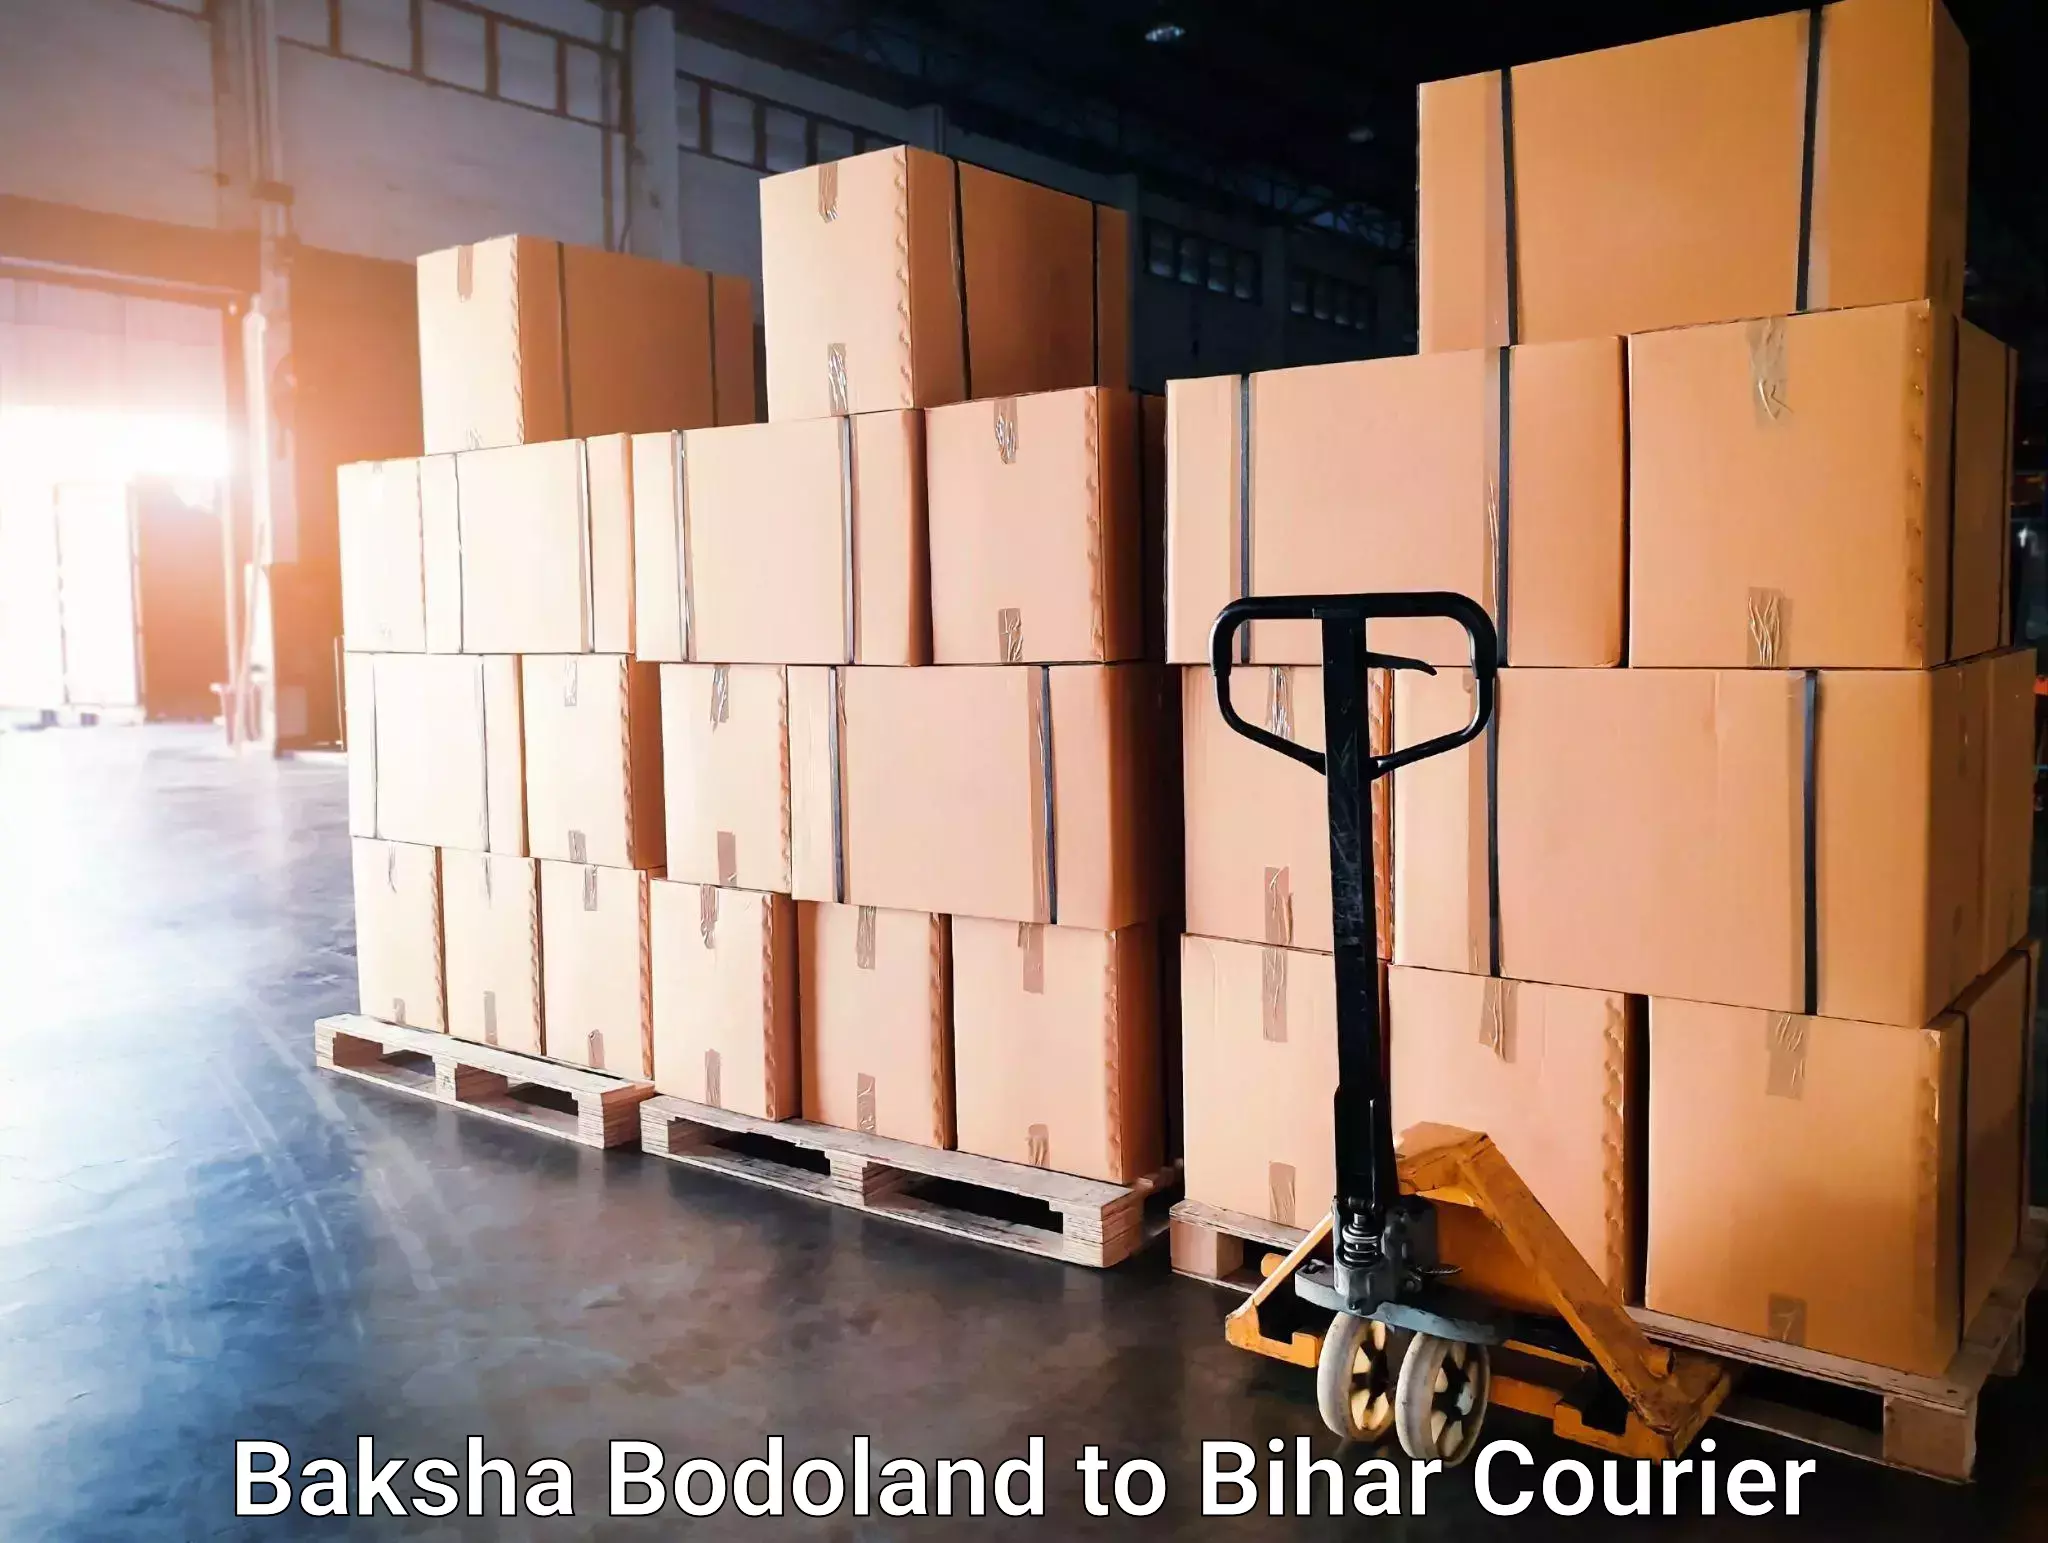 Advanced tracking systems Baksha Bodoland to Bihar